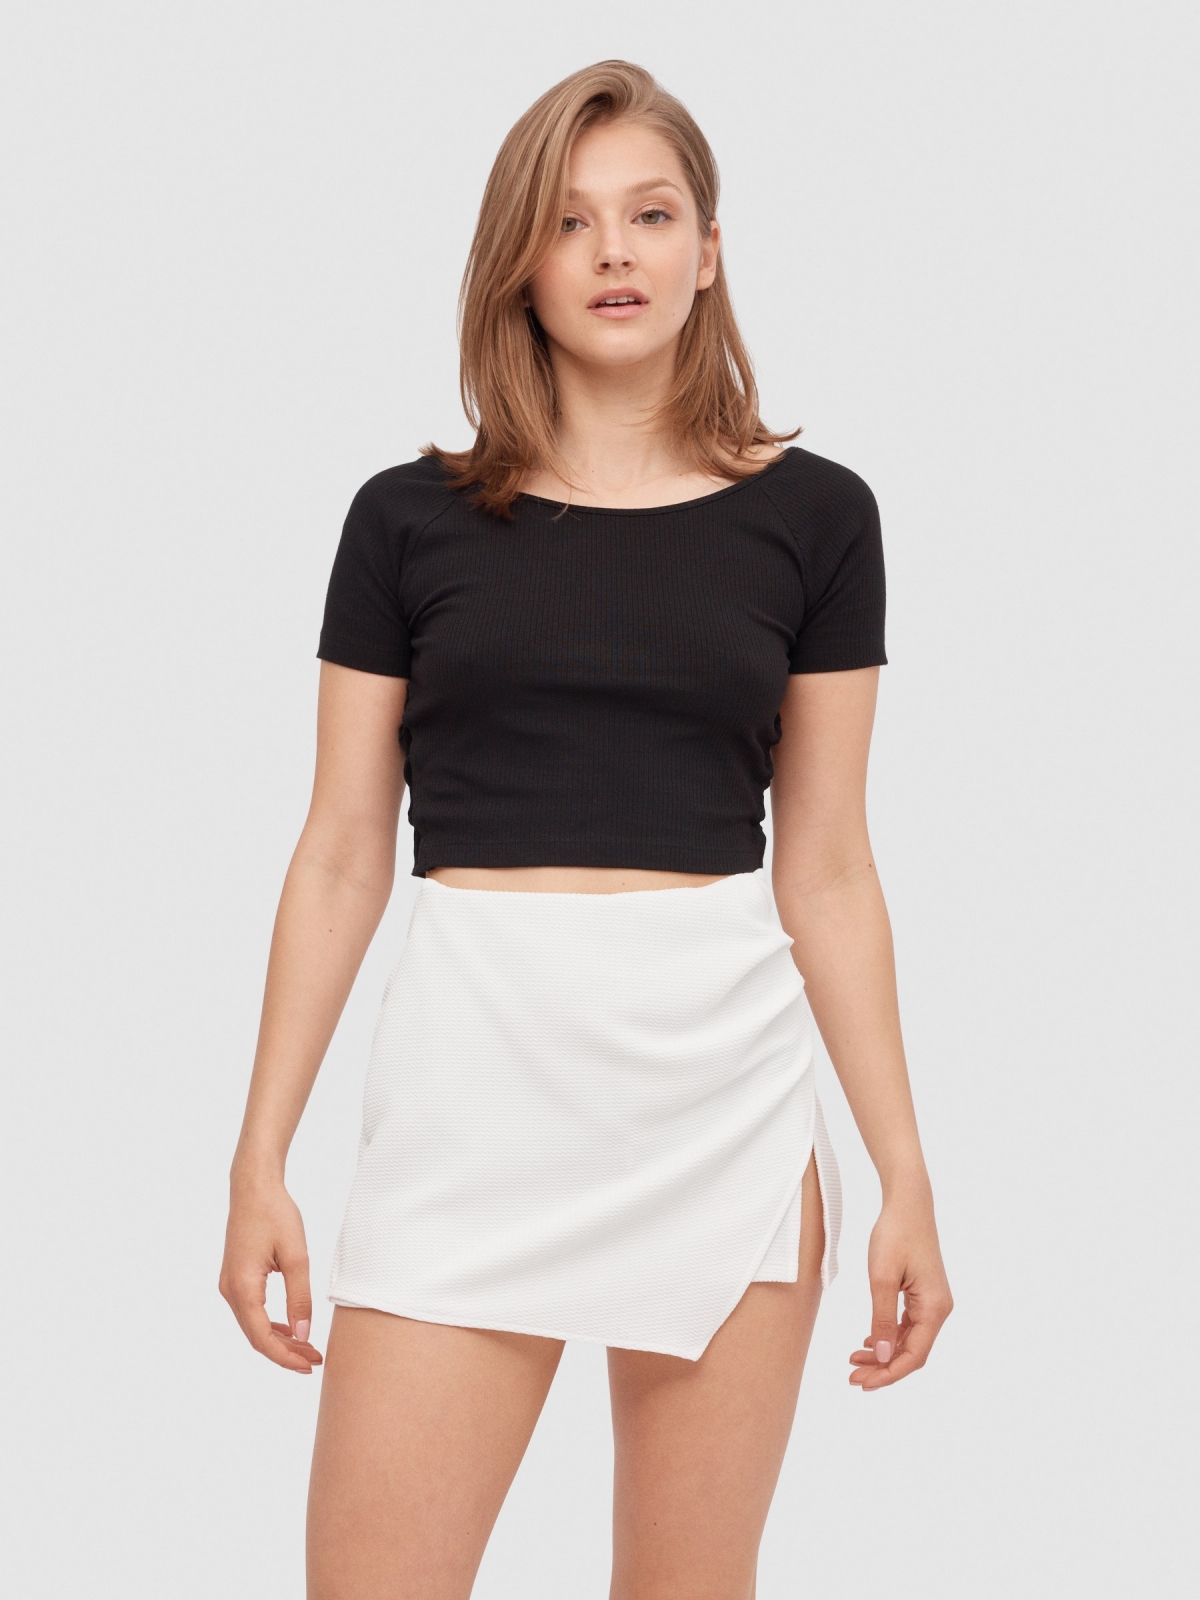 Mini skort skirt white middle front view